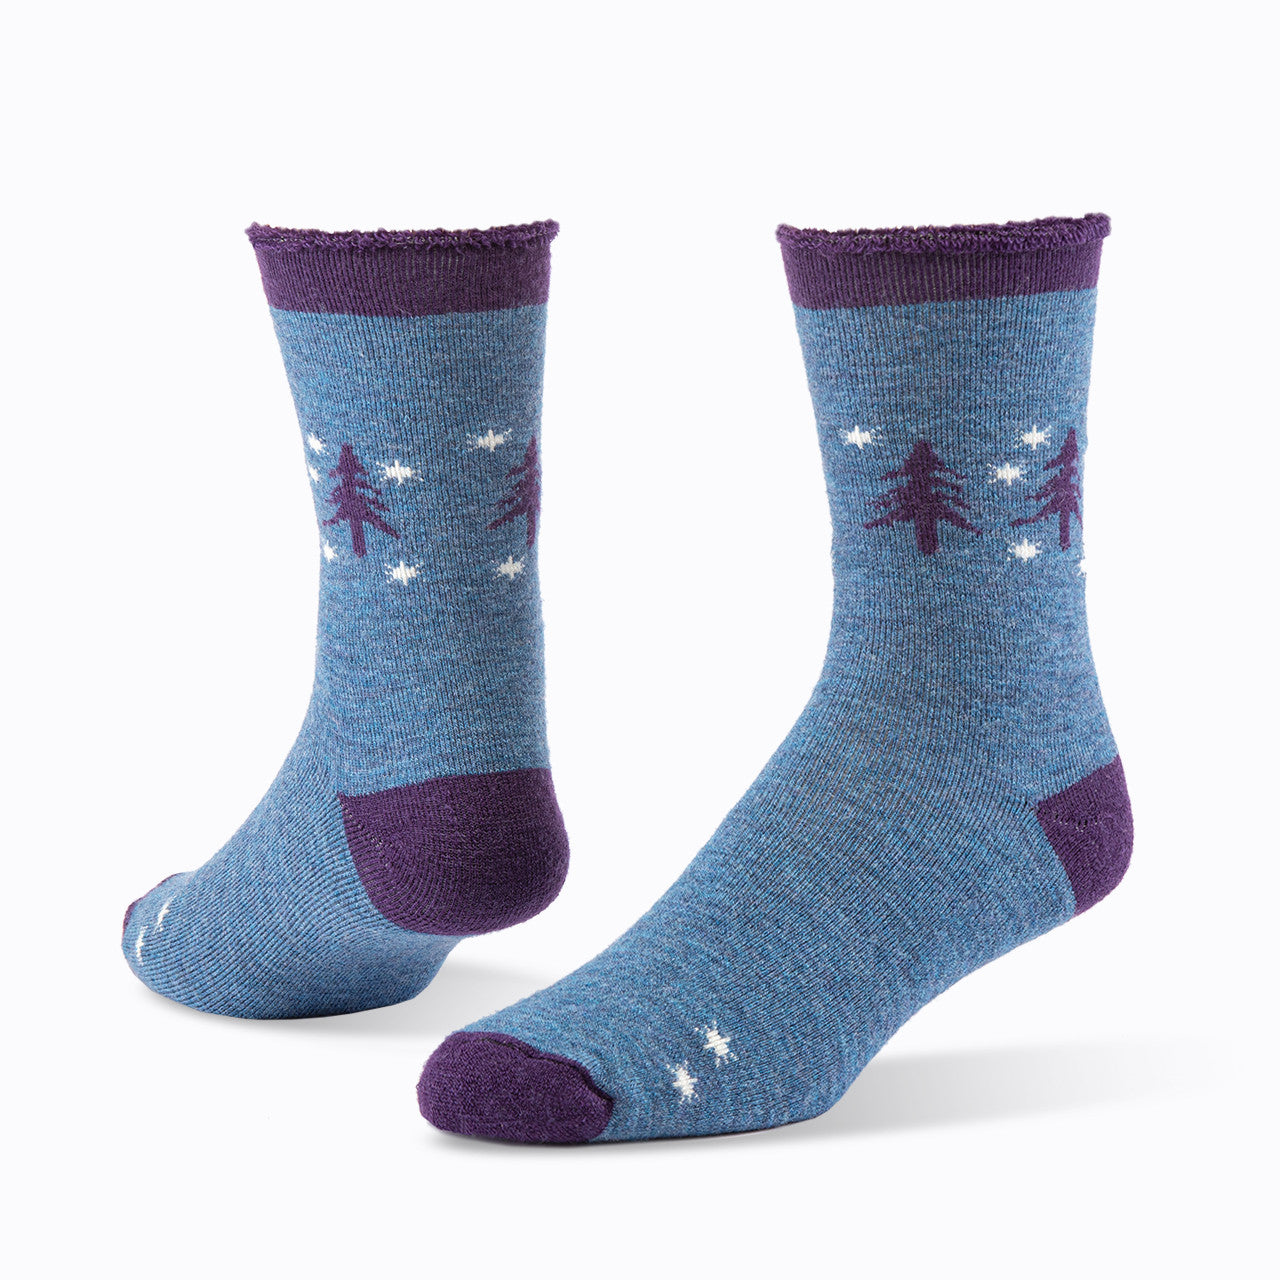 Maggie's Organics - Organic Wool Snuggle Socks - Forest Blue